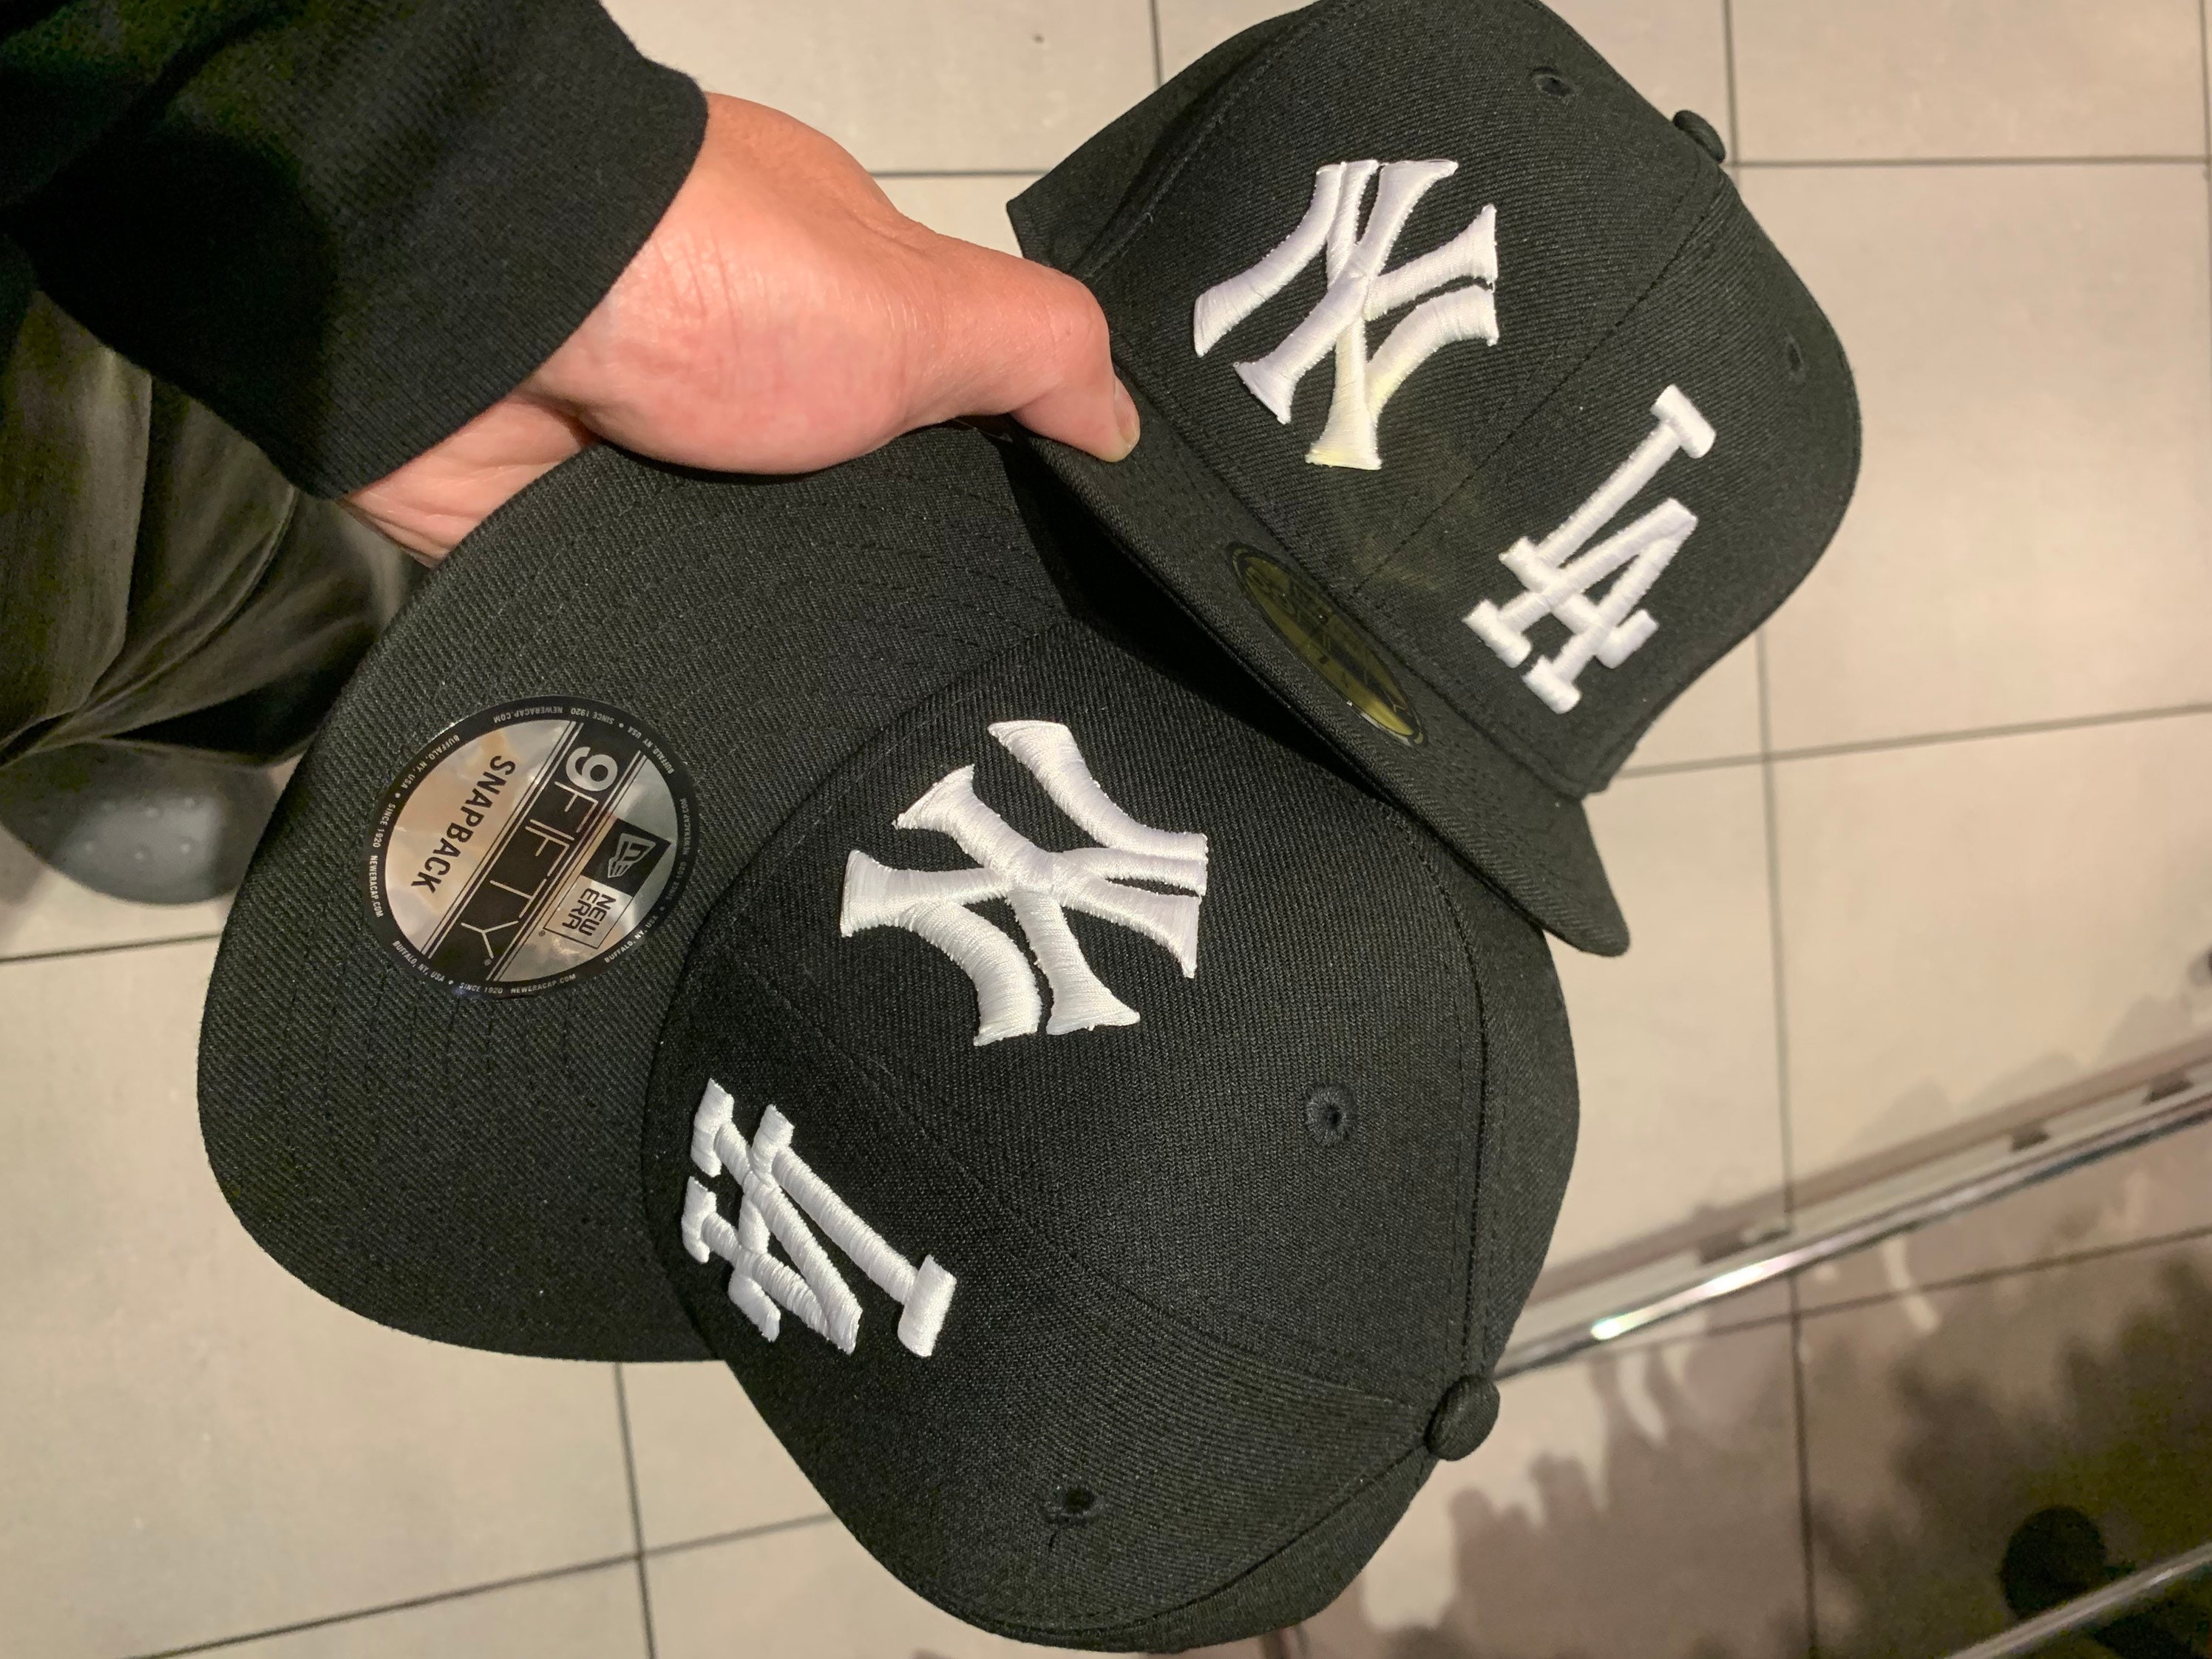 New Era Exclusive bucket hat in black NY monogram